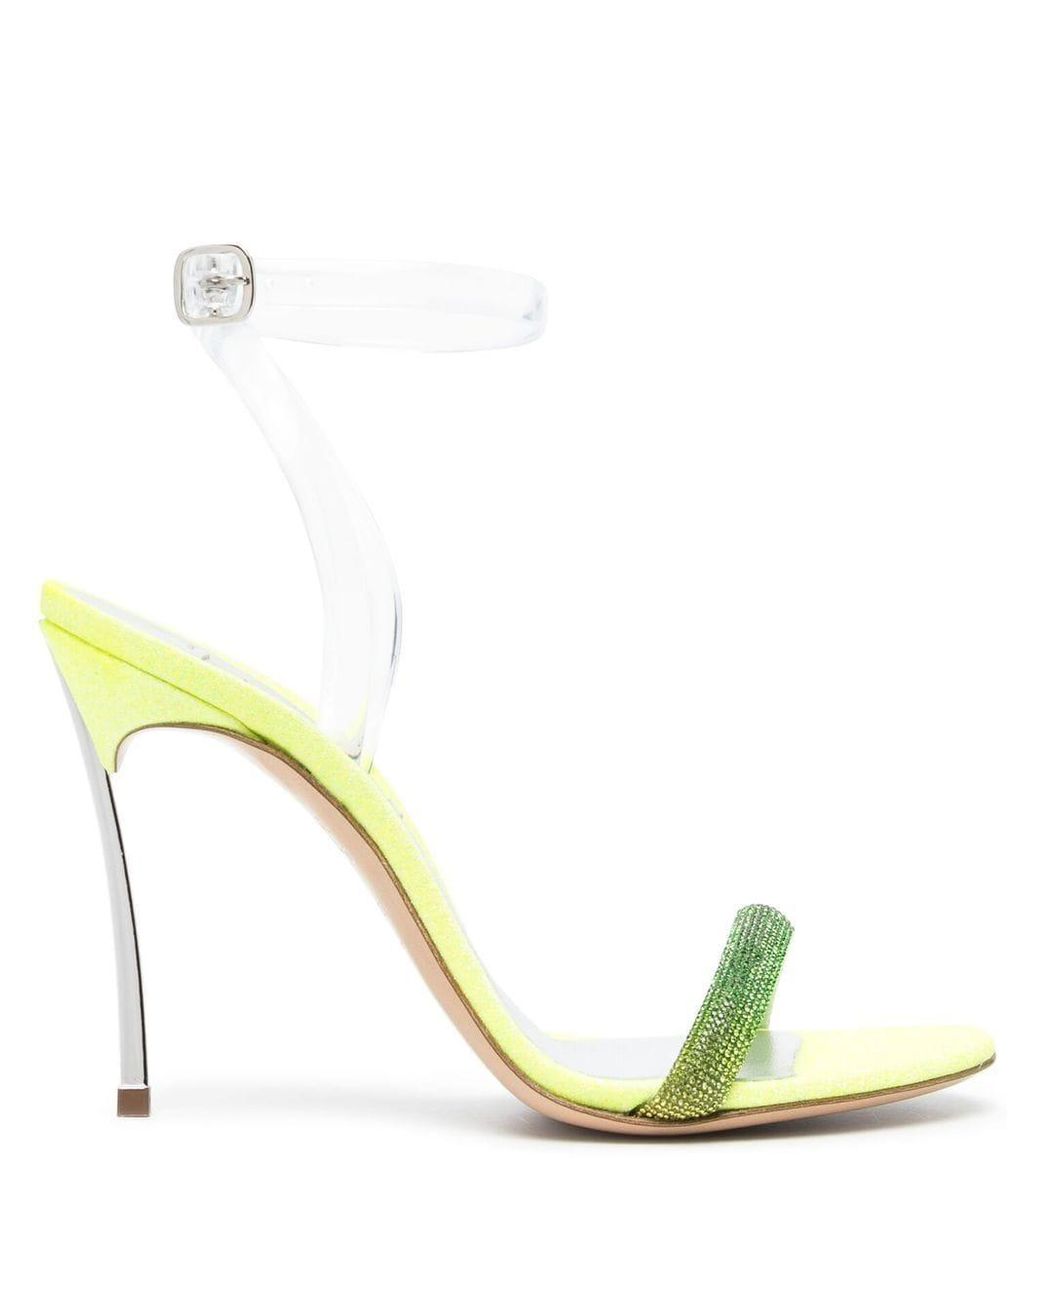 Casadei 120mm Glittered High-heel Sandals in Metallic | Lyst